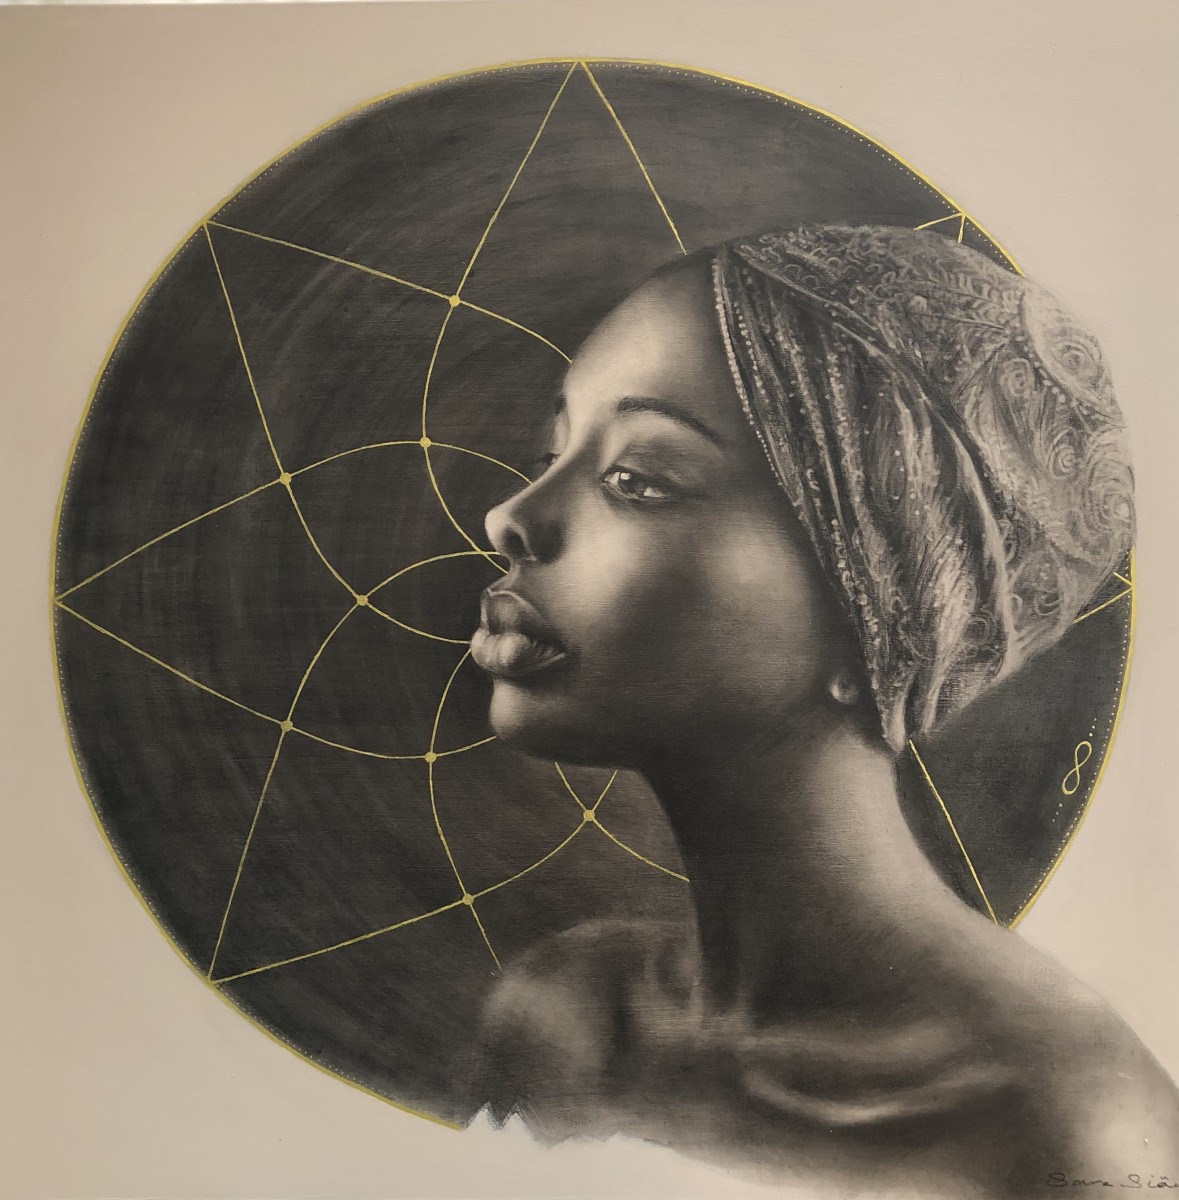 Kioni ('She Who Sees Beyond' in Swahili) by Sara Siân 